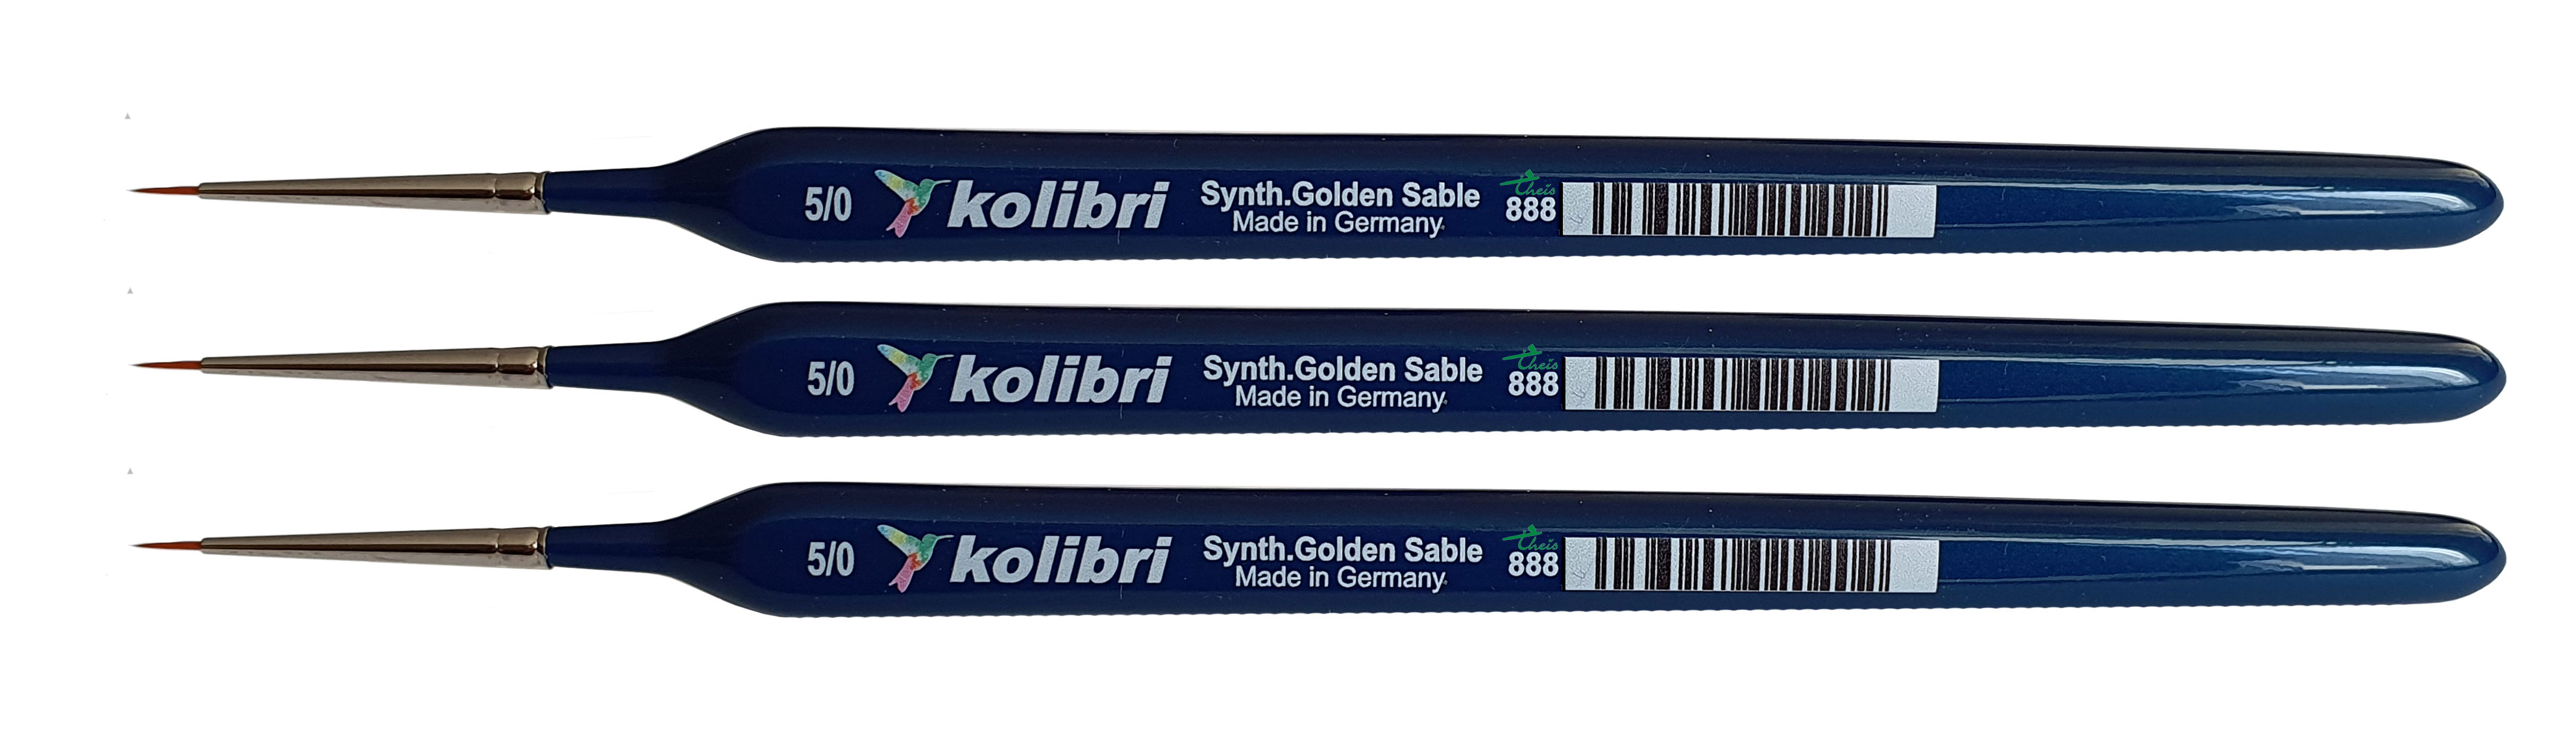 Synthetic Golden Sable-Detailpinsel 5/0, 3 Stück